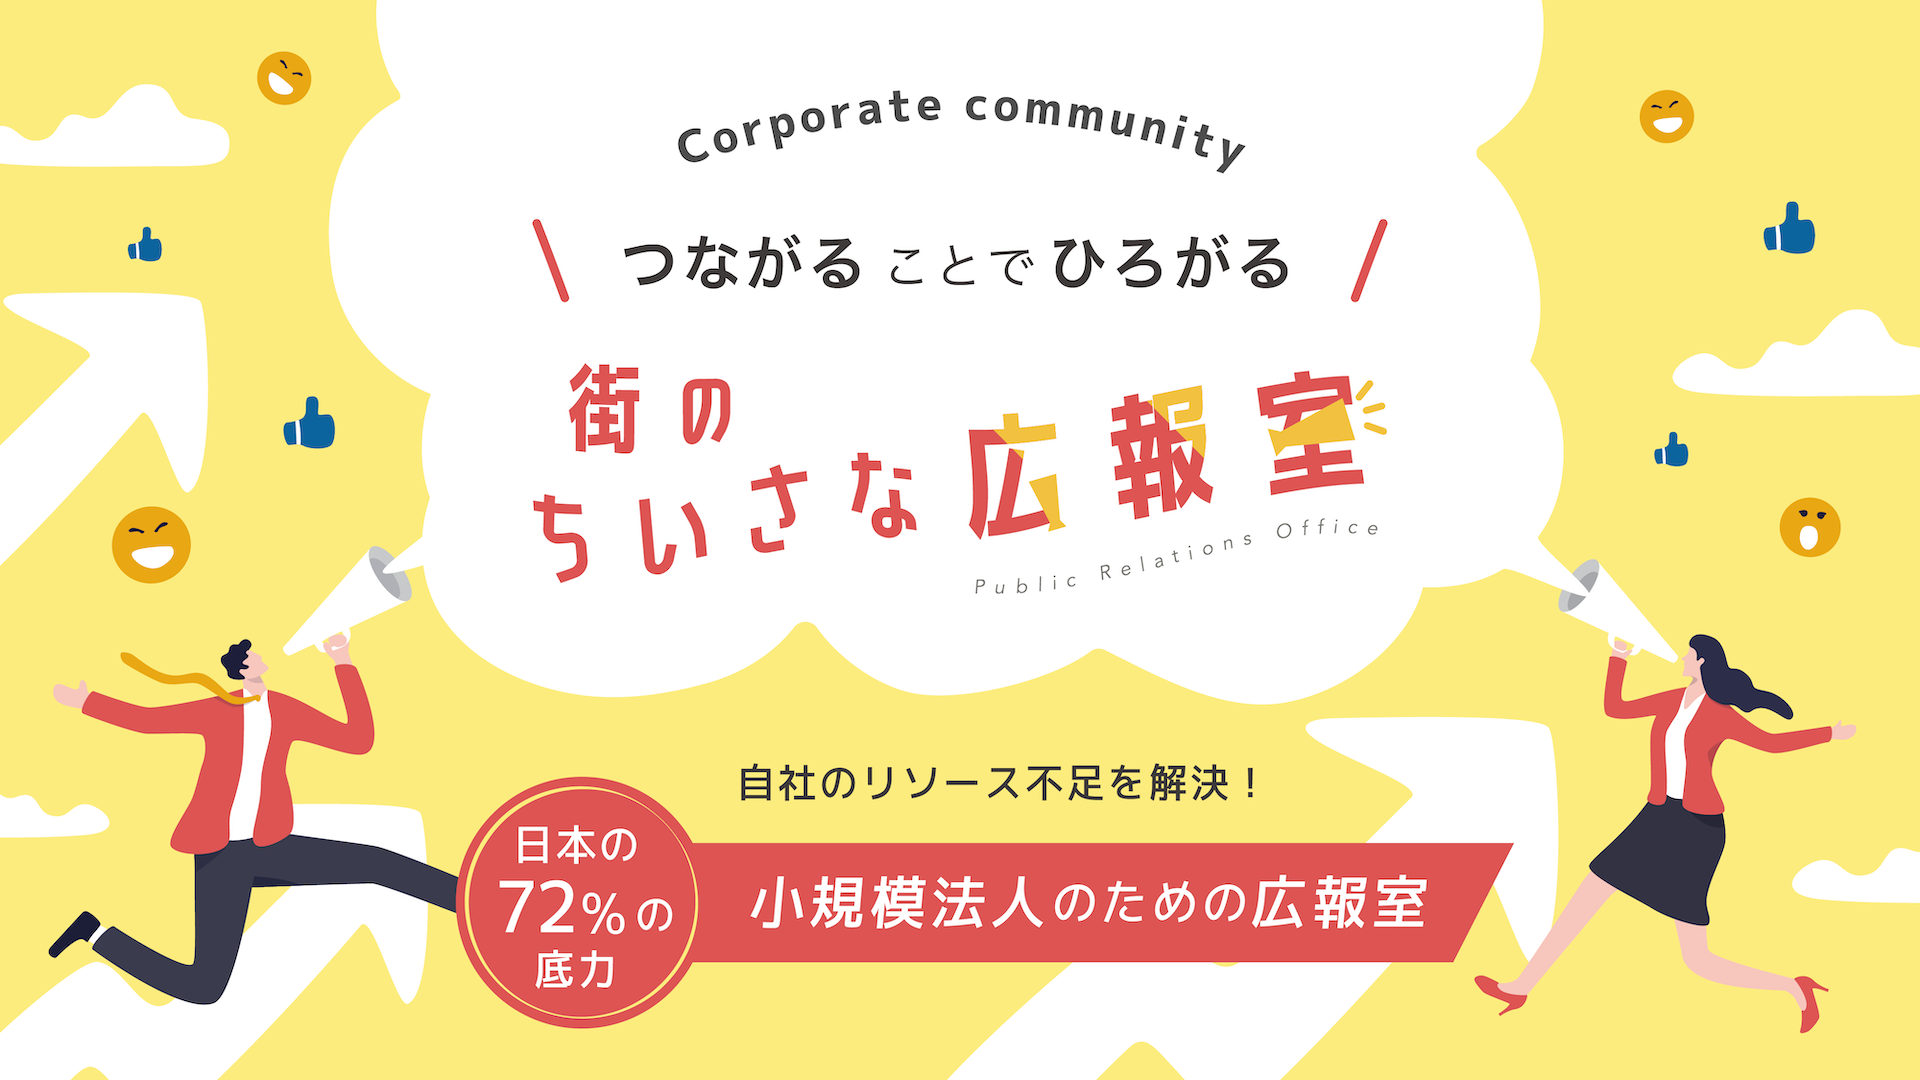 Corporate communityでつながることでひろがる街のちいさな広報室:自社のリソース不足を解決！日本の72%の底力 小規模法人のための広報室